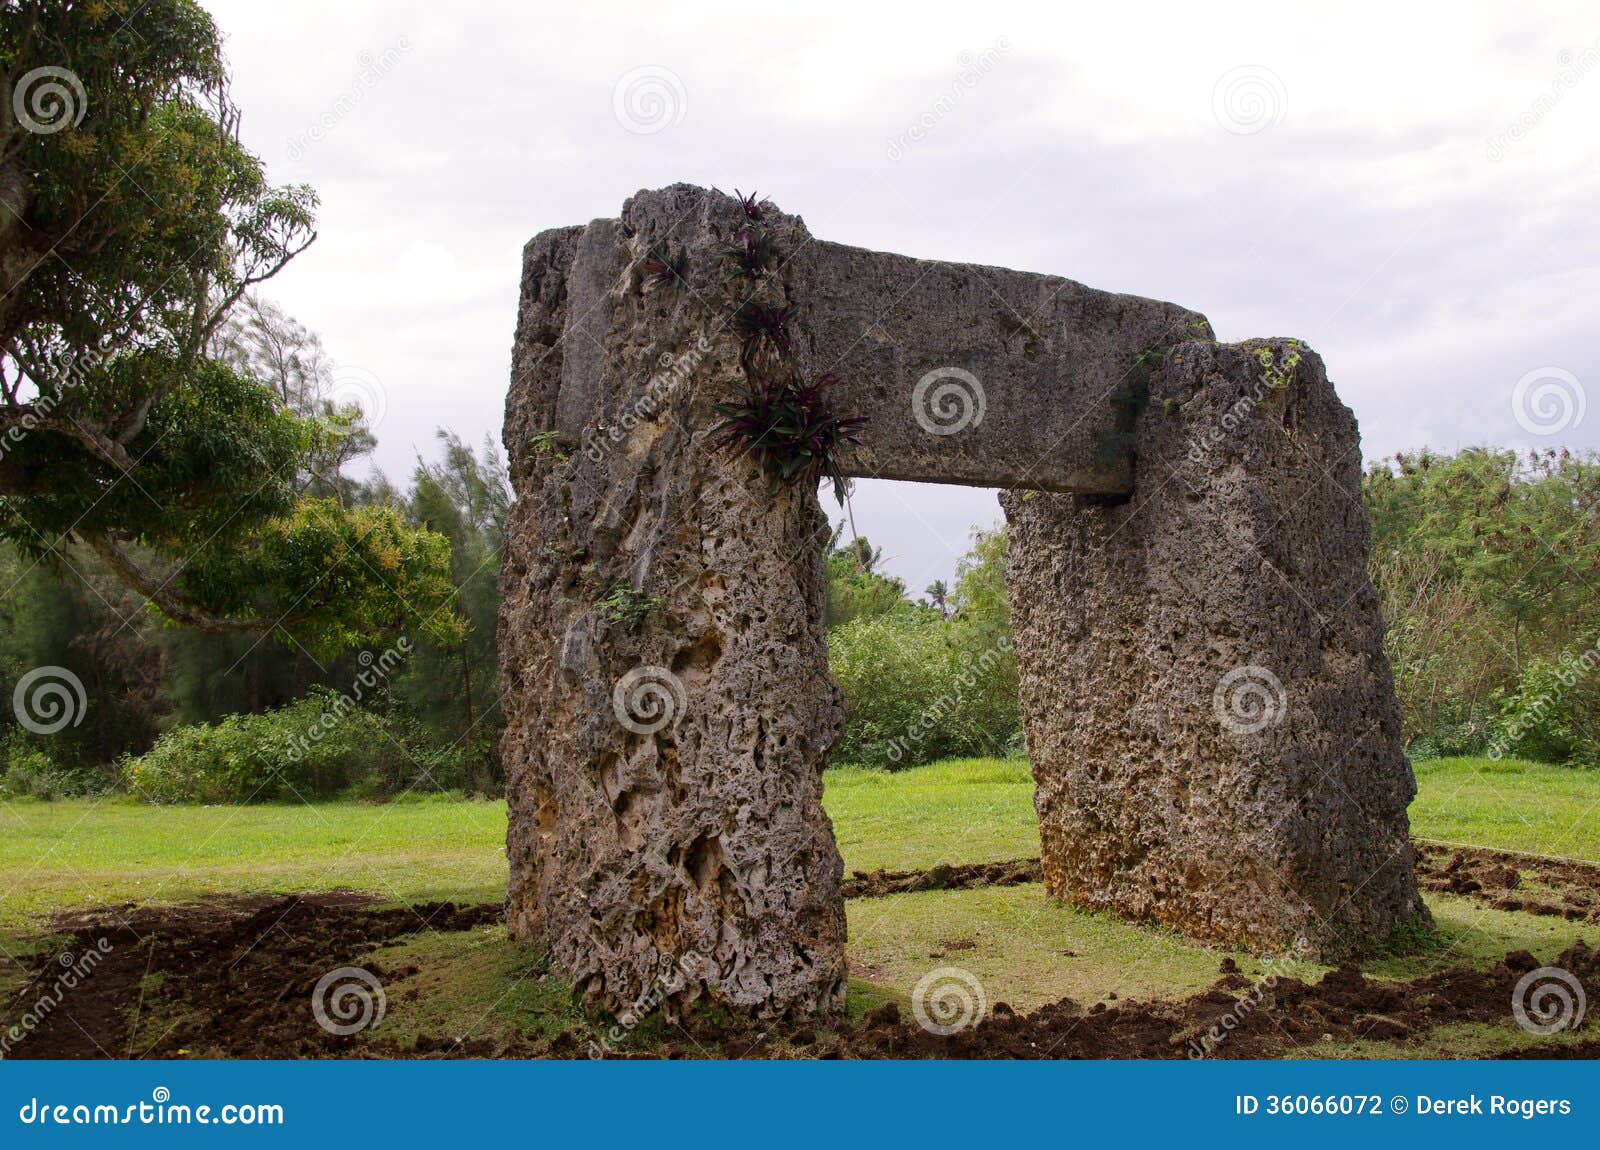 stonehenge of tonga.